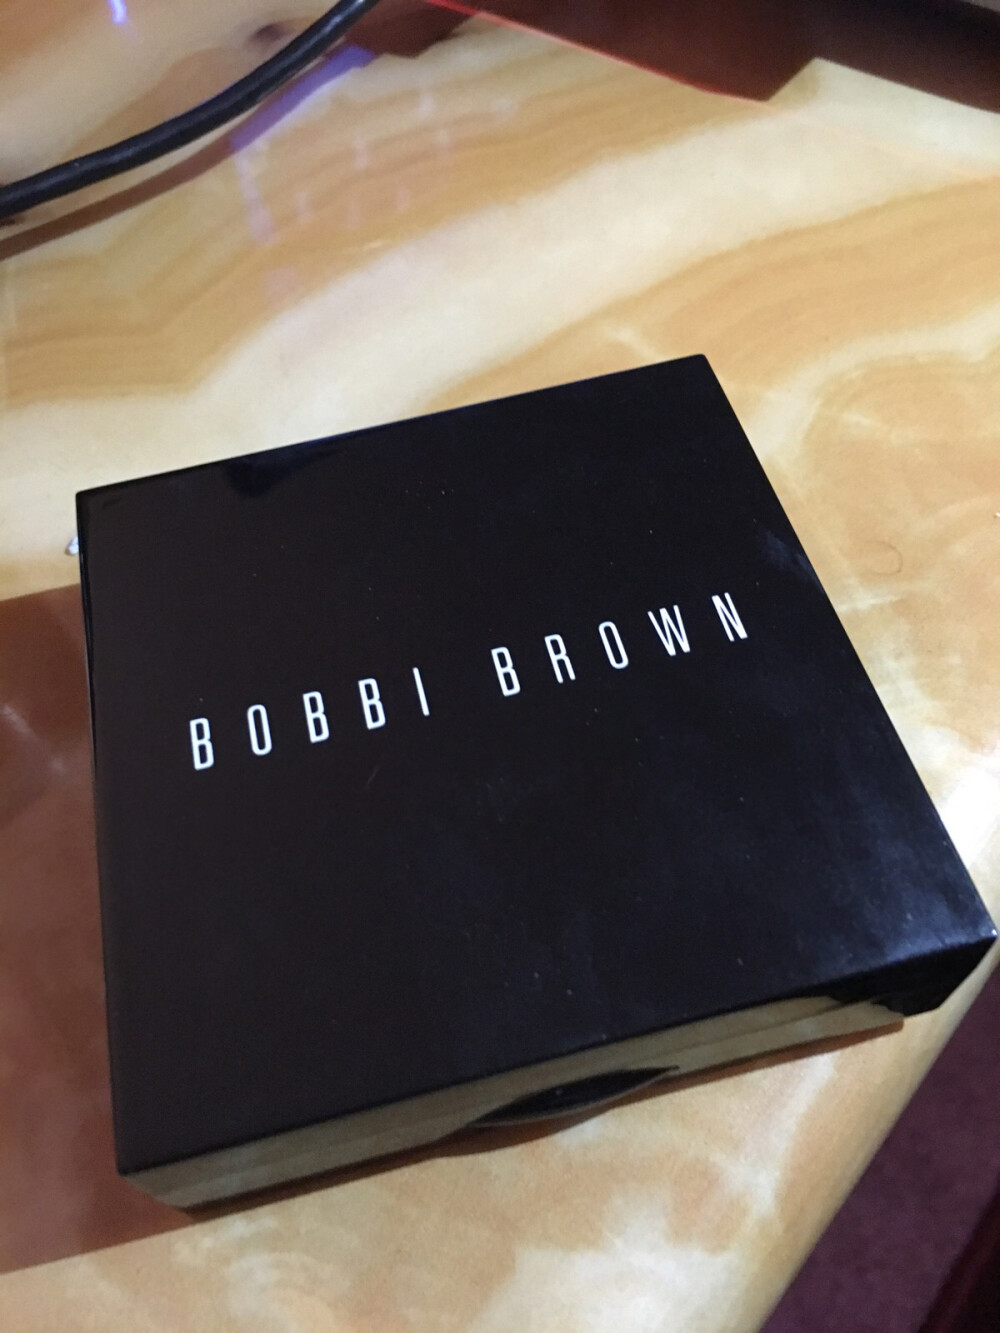 Bobbi Brown，这盒以大地色系为主的眼影美上了天了！最亮色可以用作高光，提亮肌肤。Bobbi Brown可谓是美妆界的大佬之一了，彩妆做得真得没的说了！爱死了！